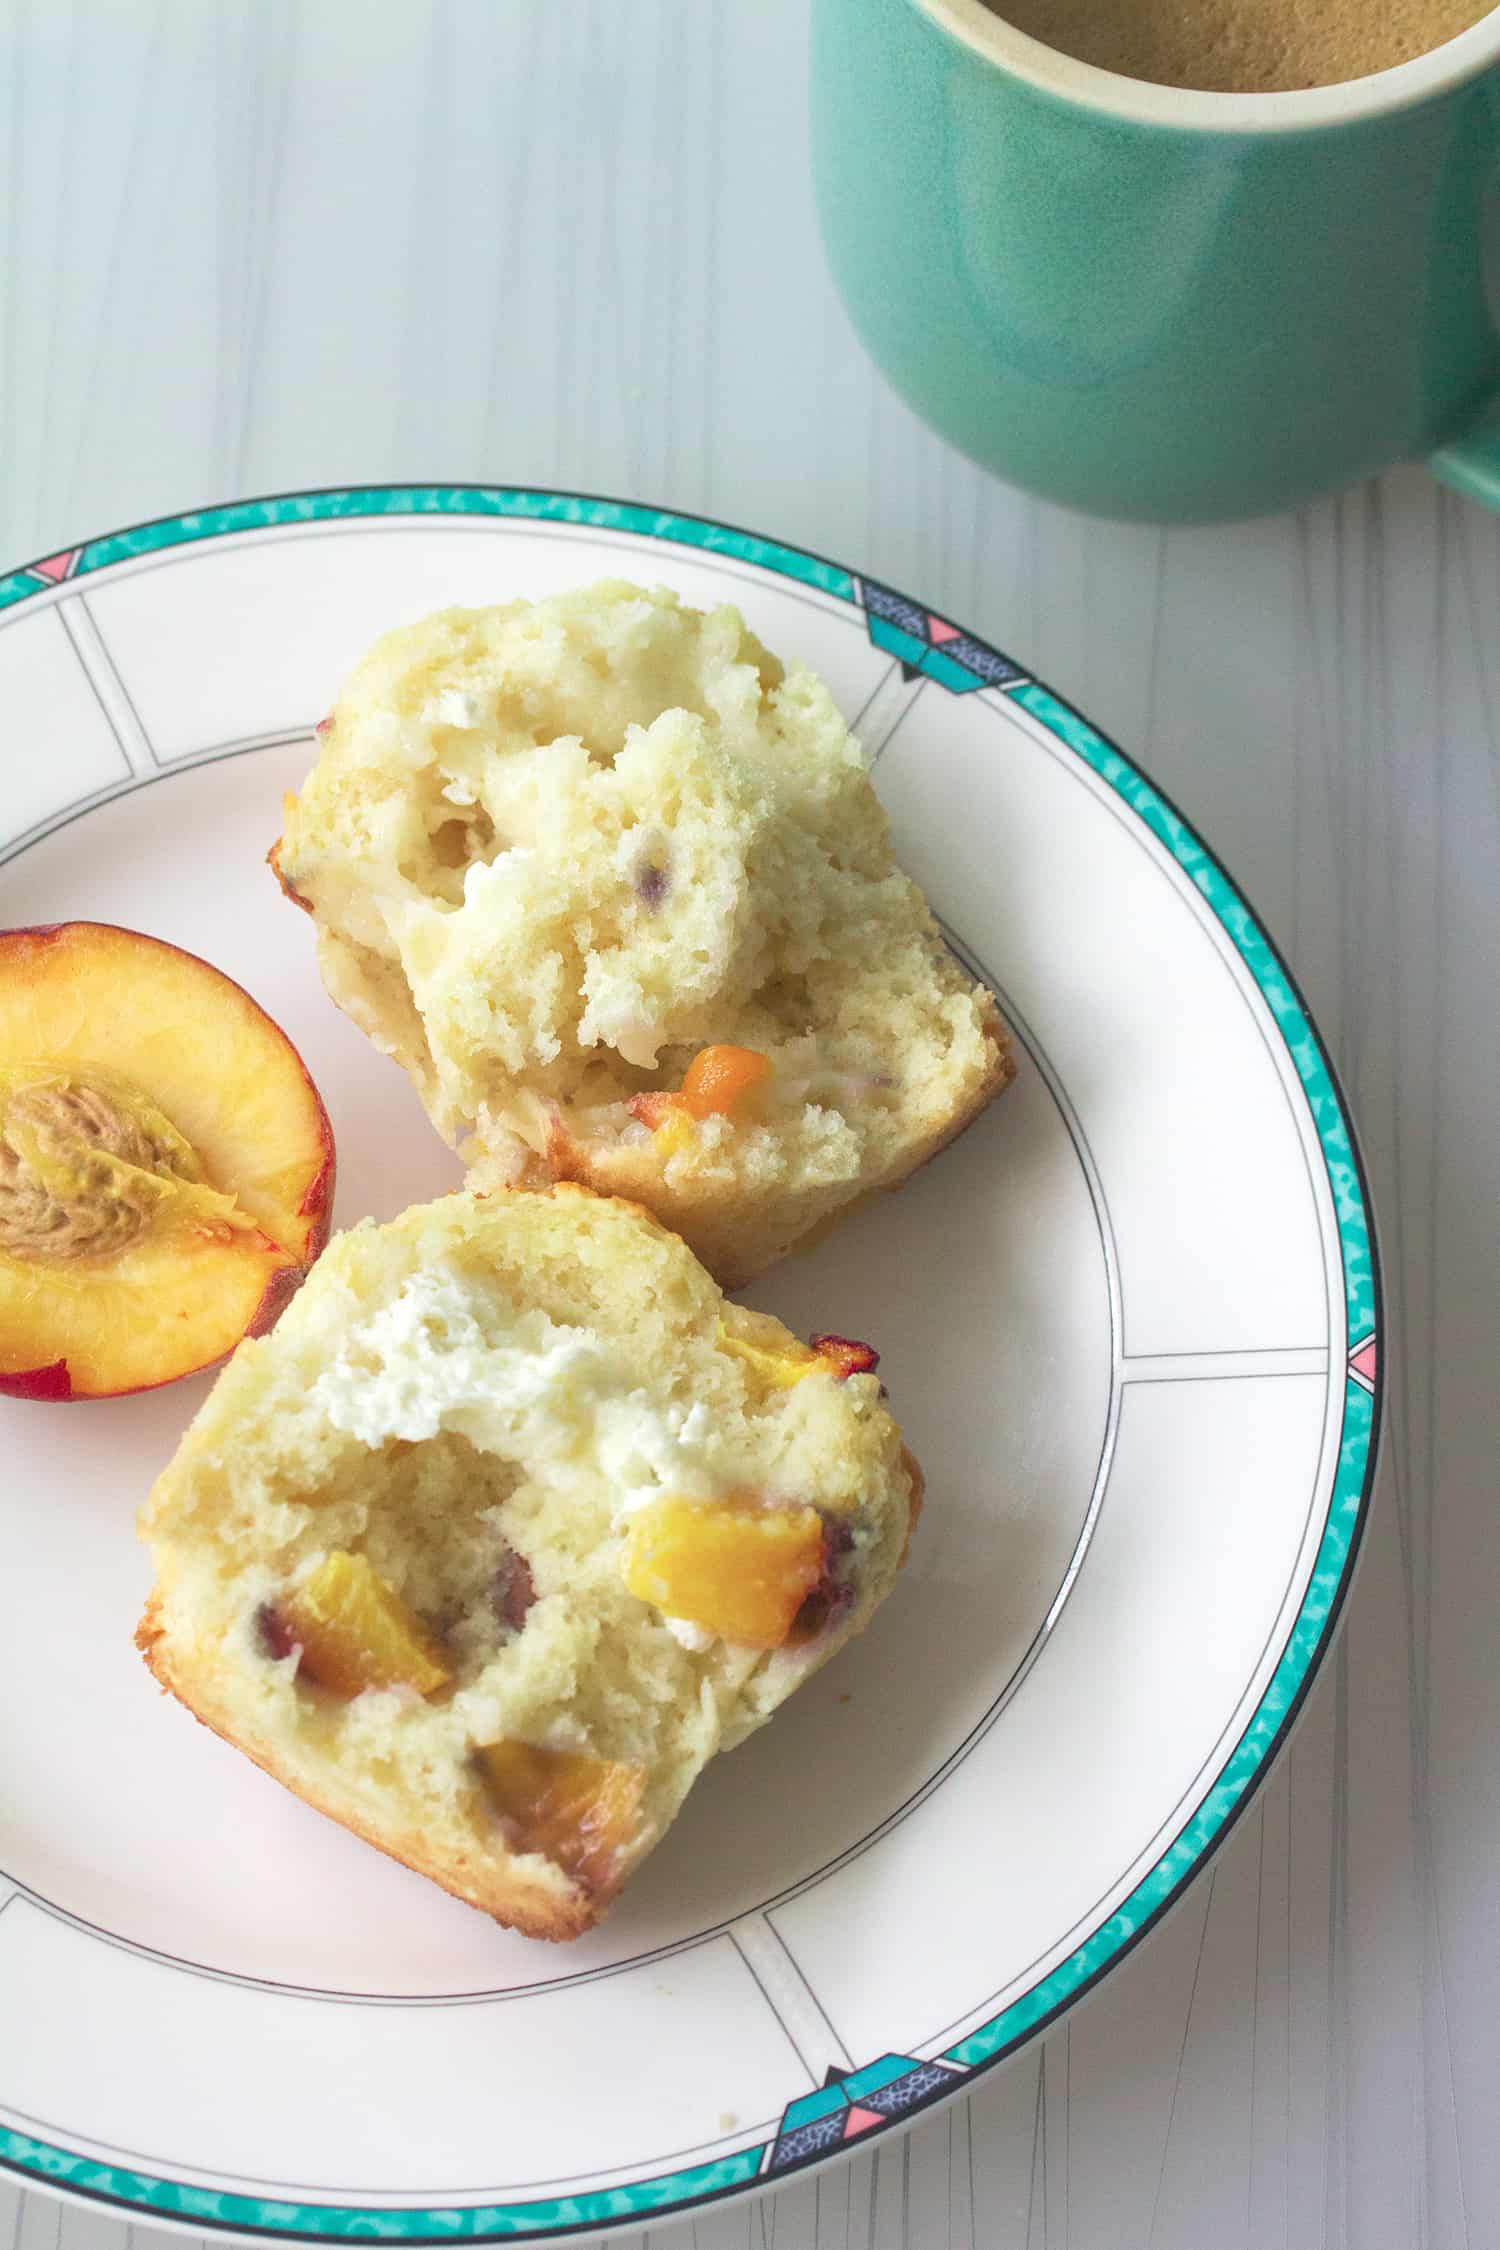 Peaches and Cream Muffins